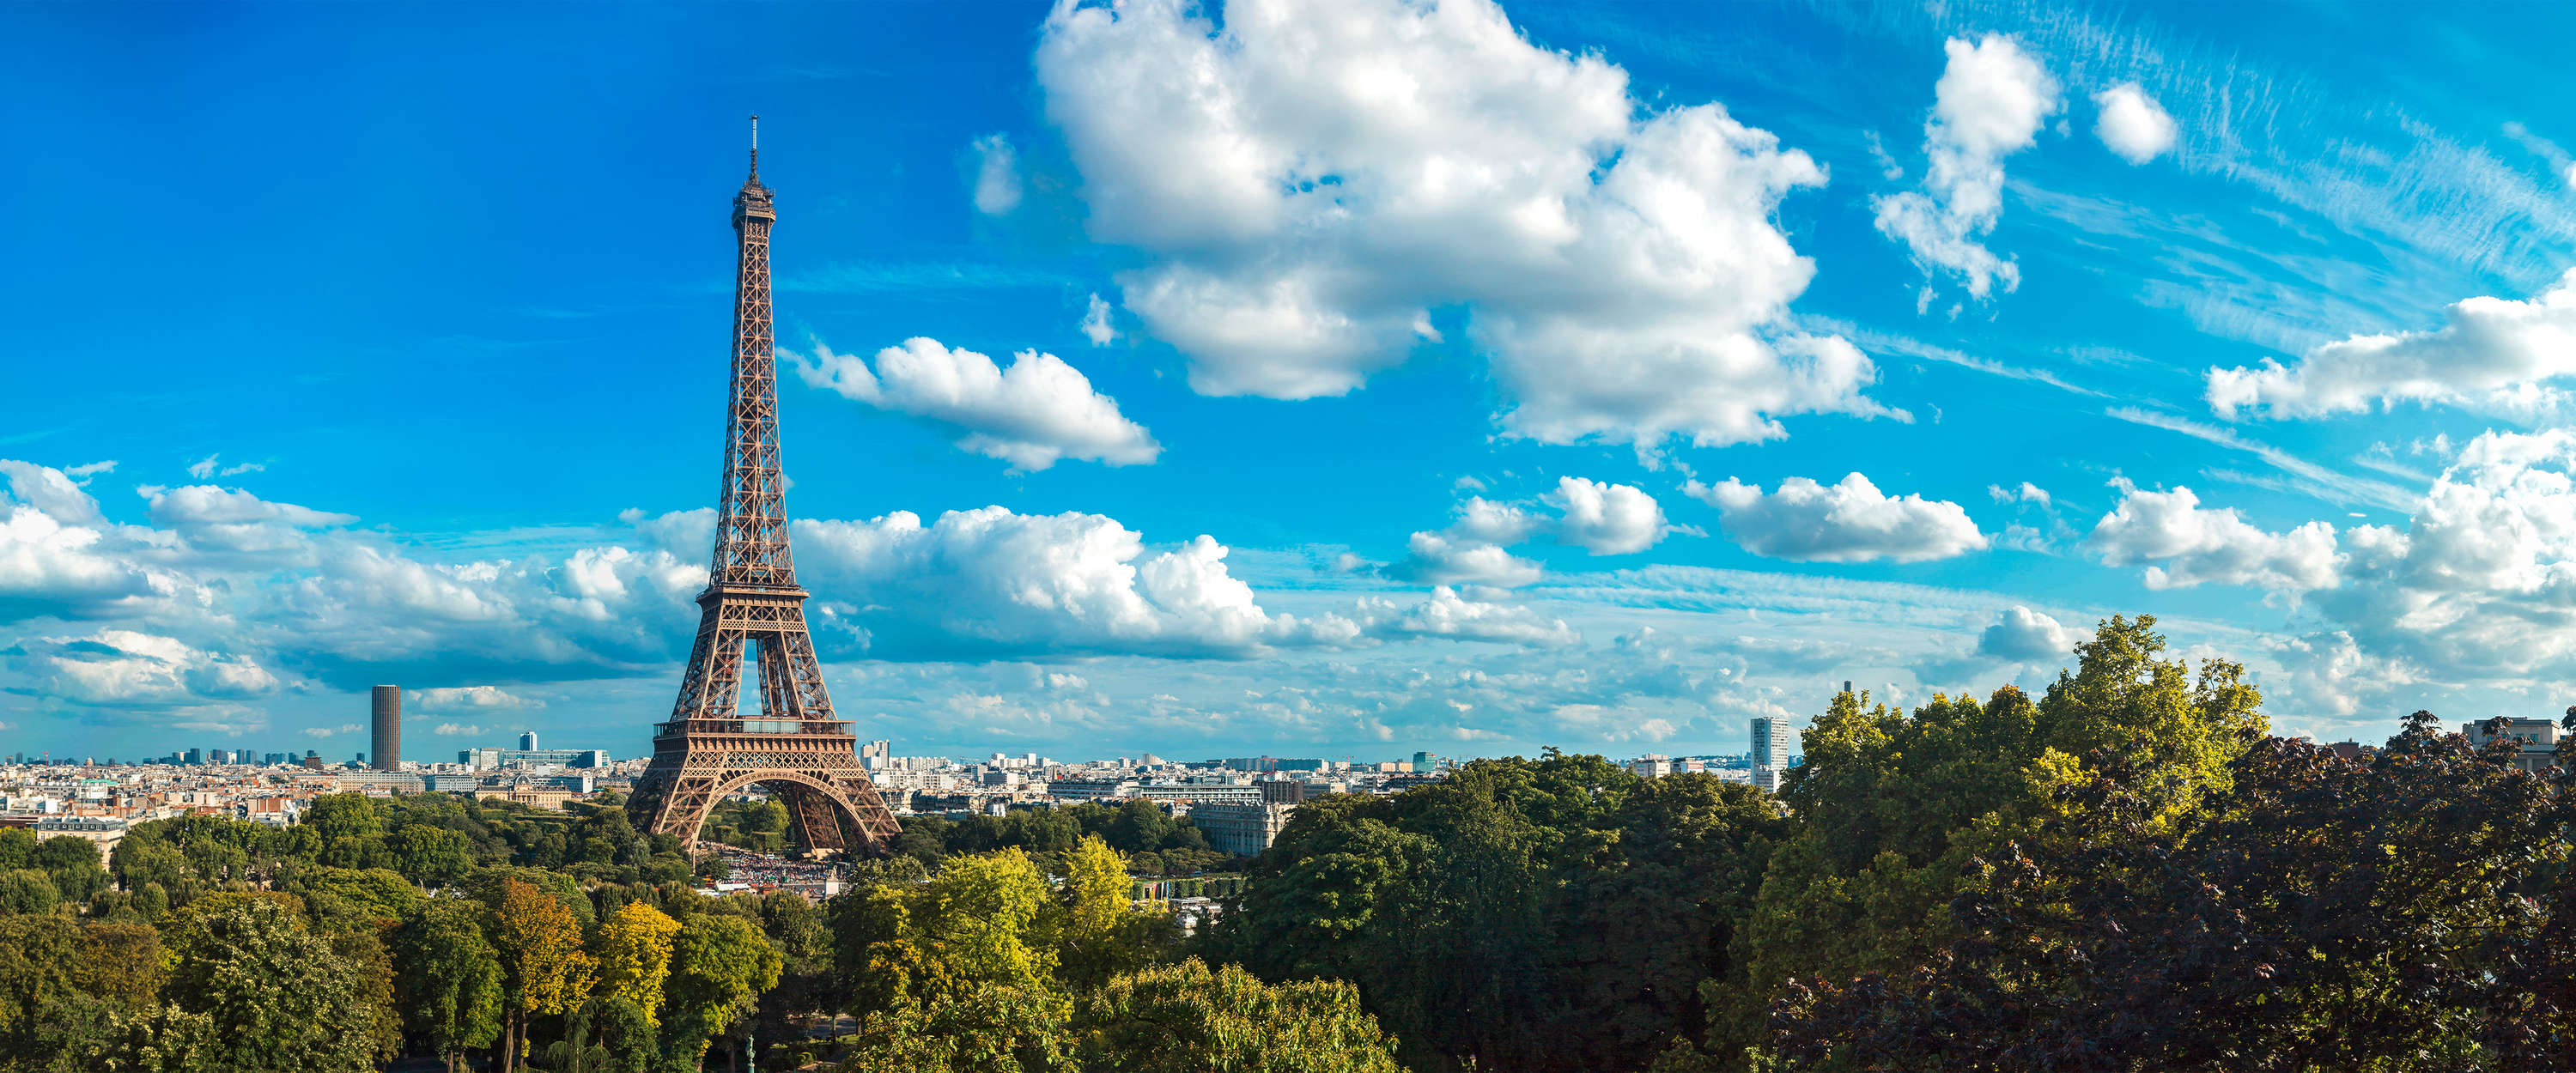             Torre Eiffel e skyline di Parigi - carta da parati
        